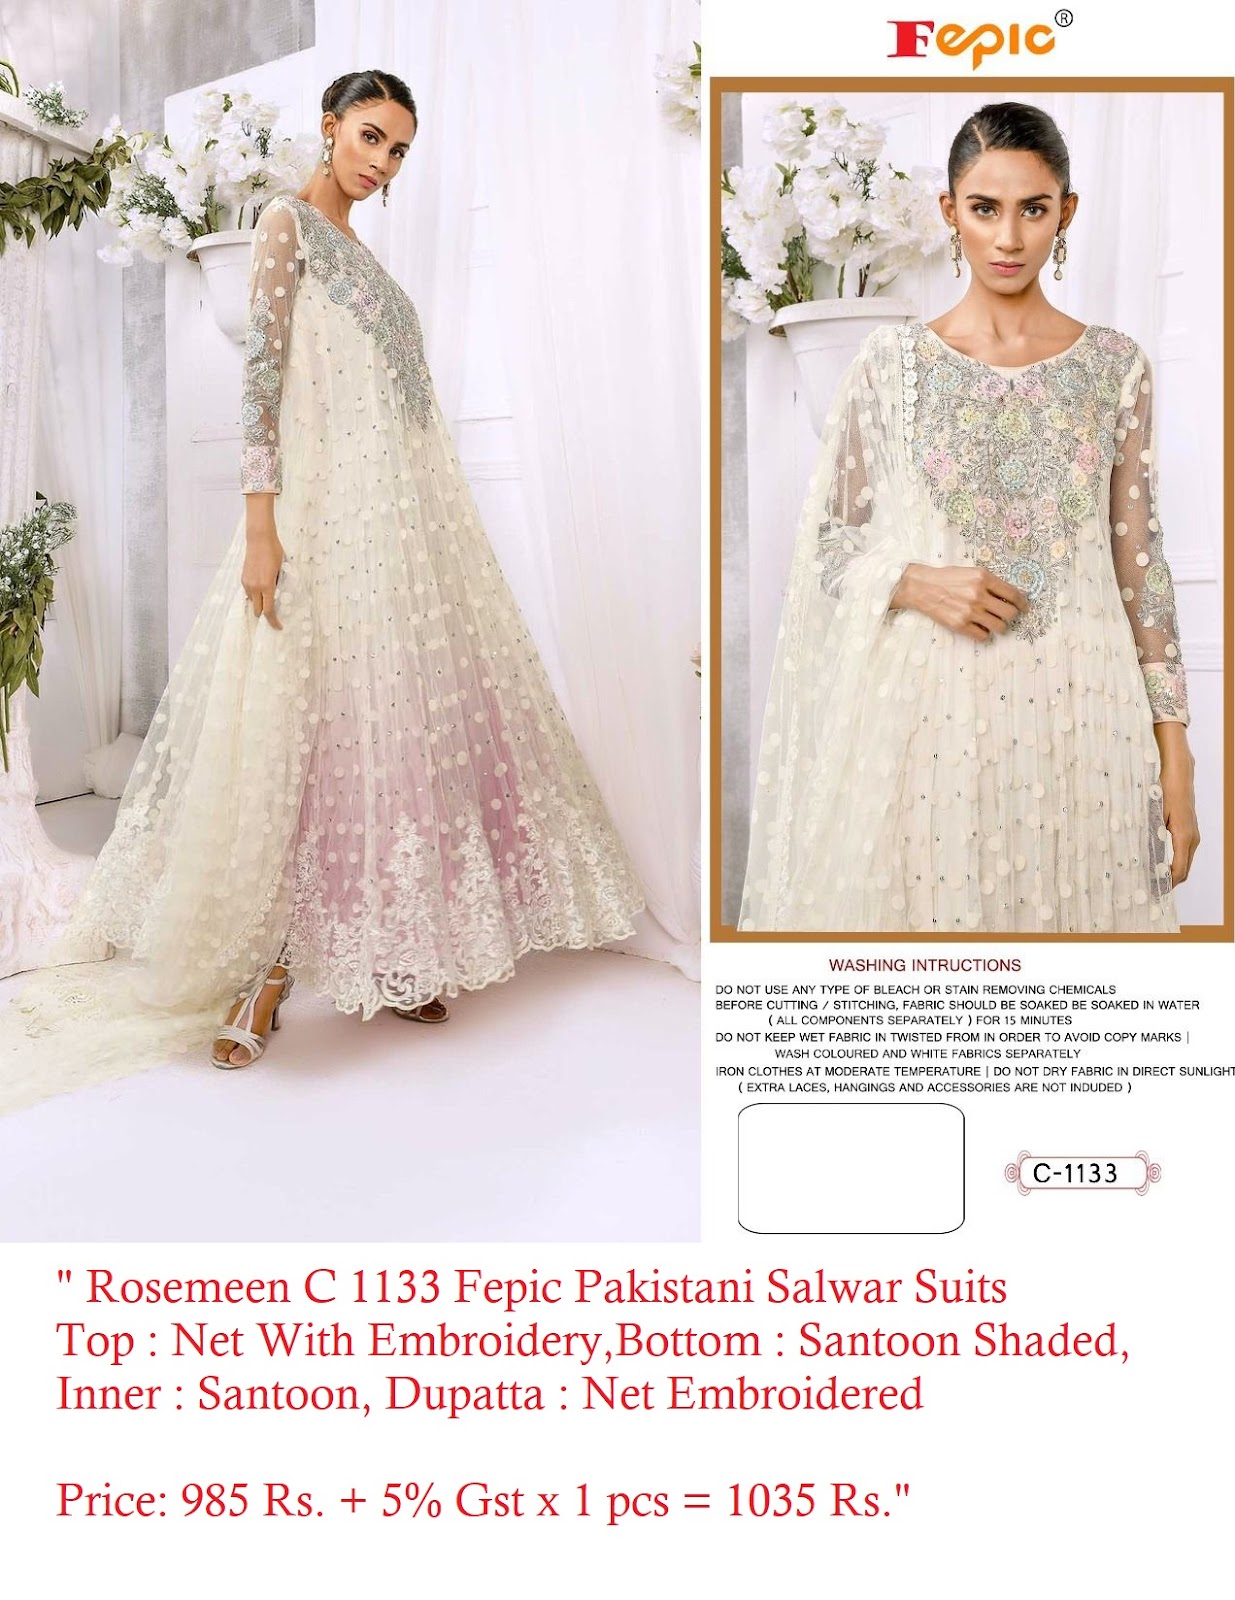 Rosemeen C 1133 Fepic Pakistani Salwar Suits Manufacturer Wholesaler